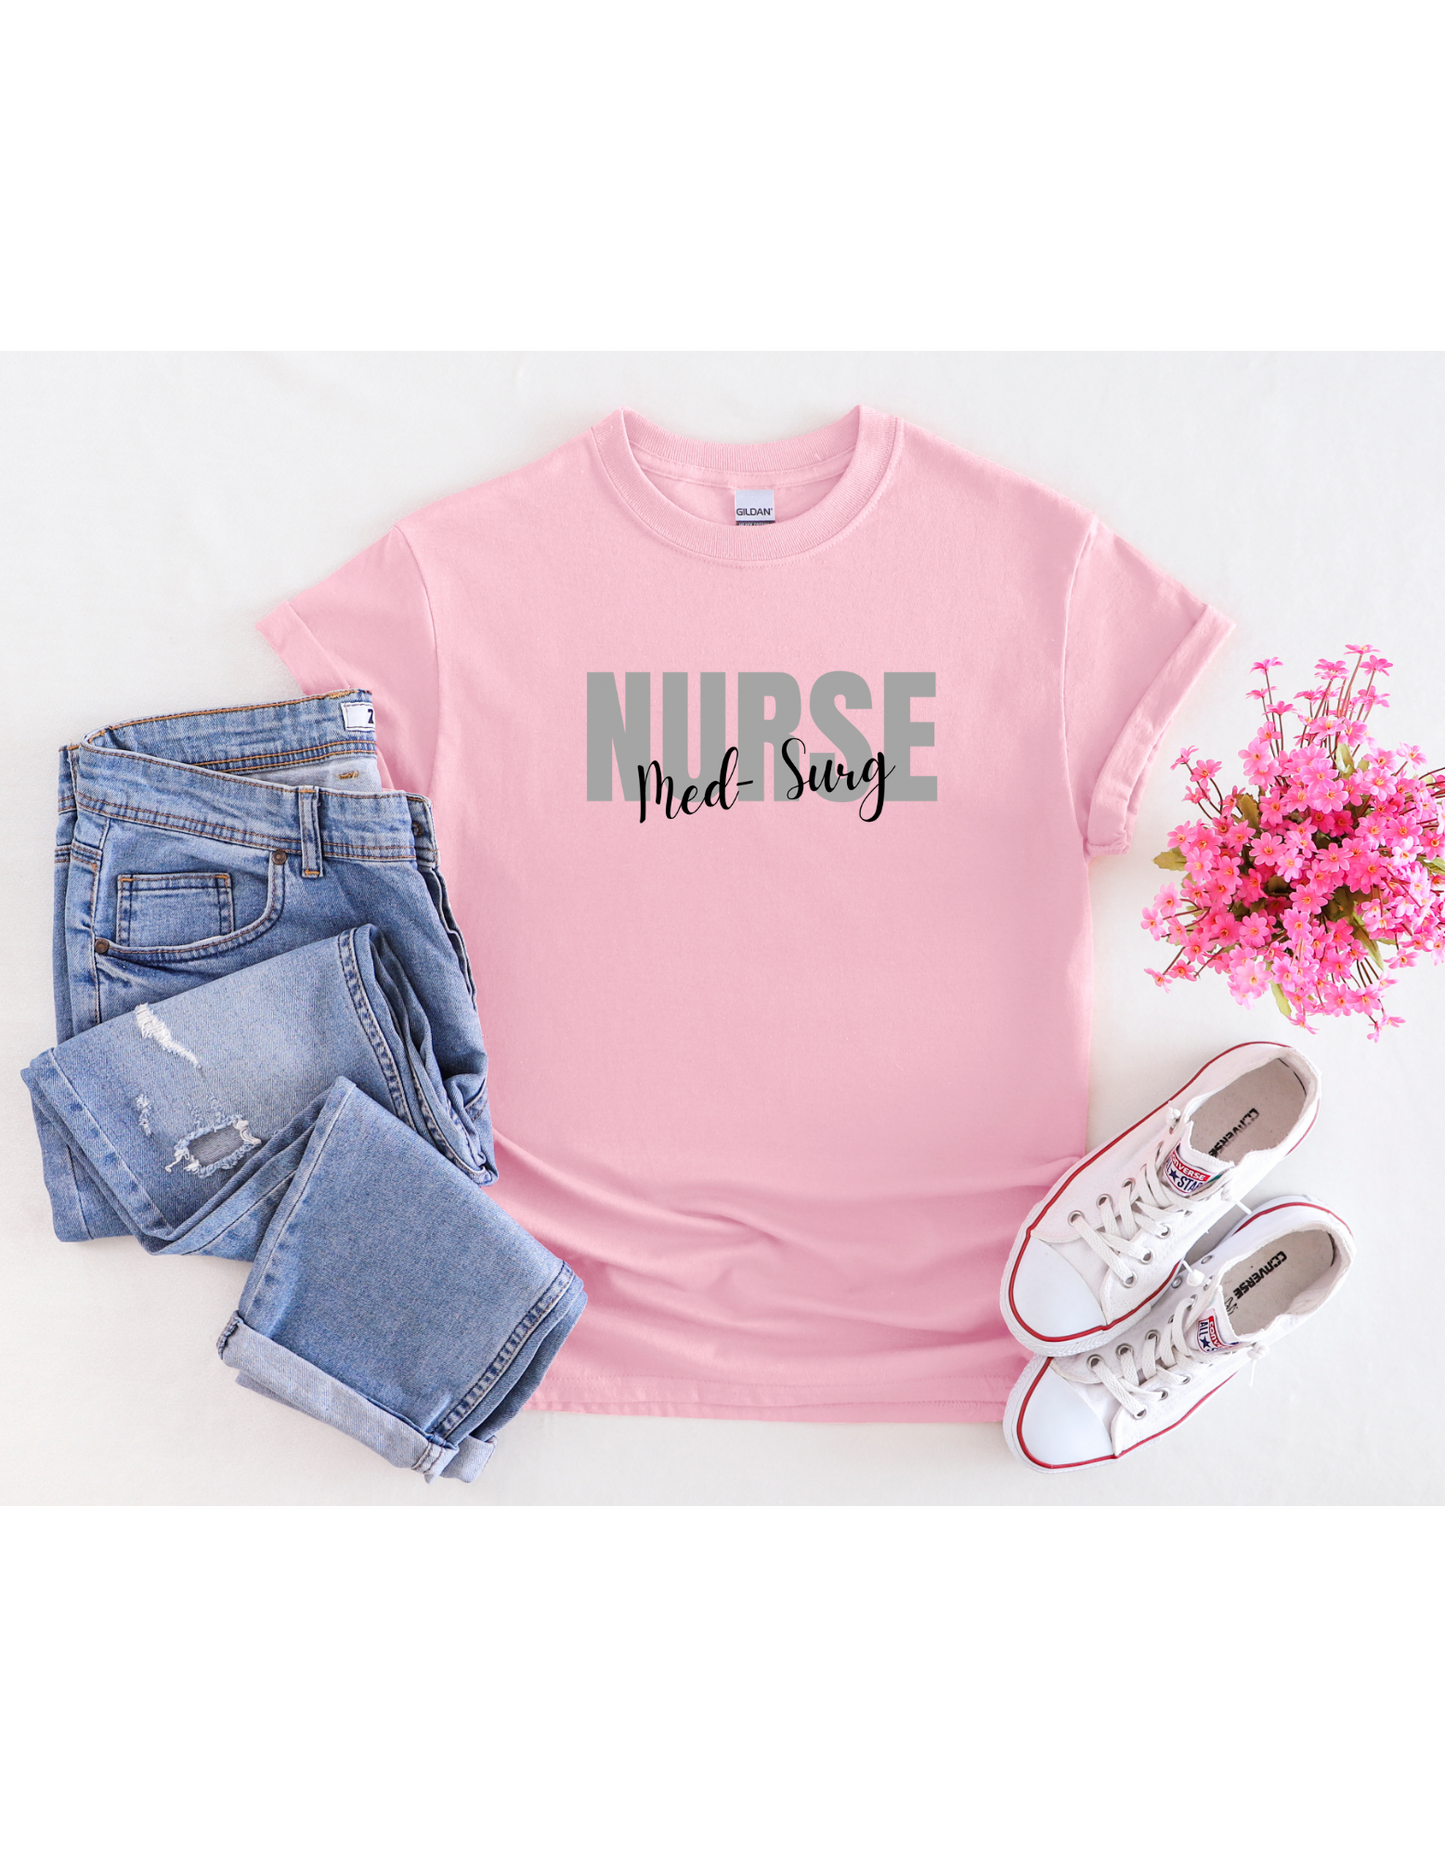 Med-Surg NURSE Tee, Healthcare Heros Shirt, Nursing Tee